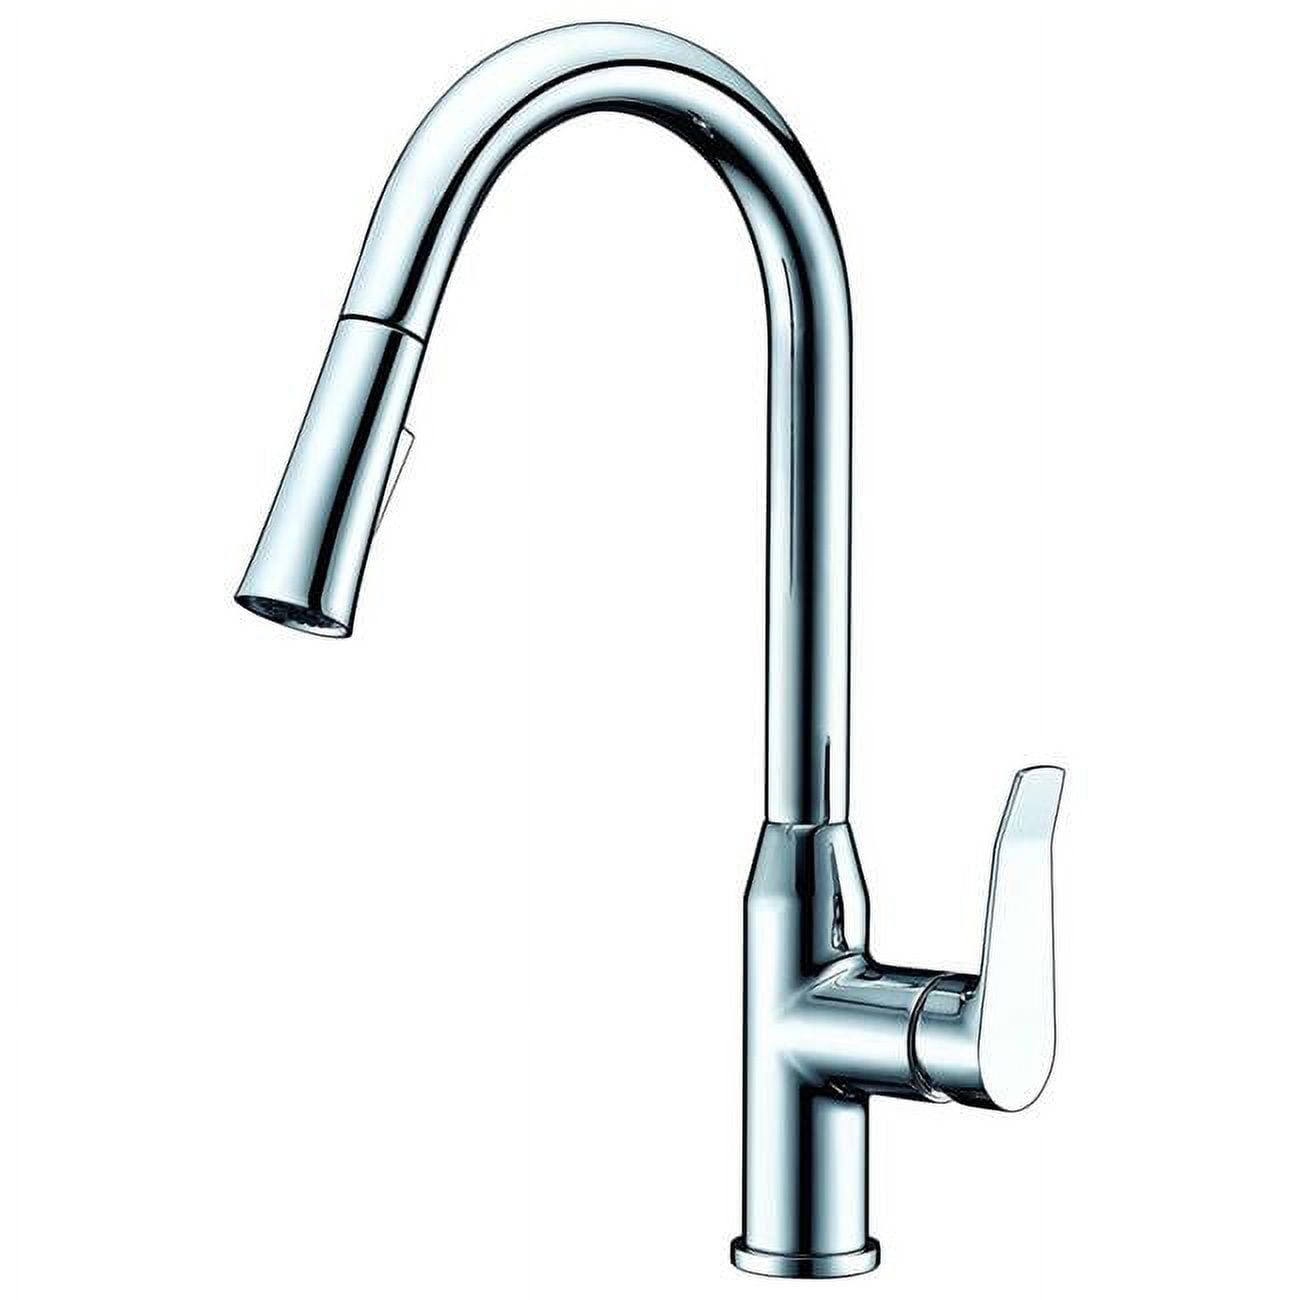 UPC 727272325227 product image for Single-Lever Lavatory Faucet, Chrome | upcitemdb.com